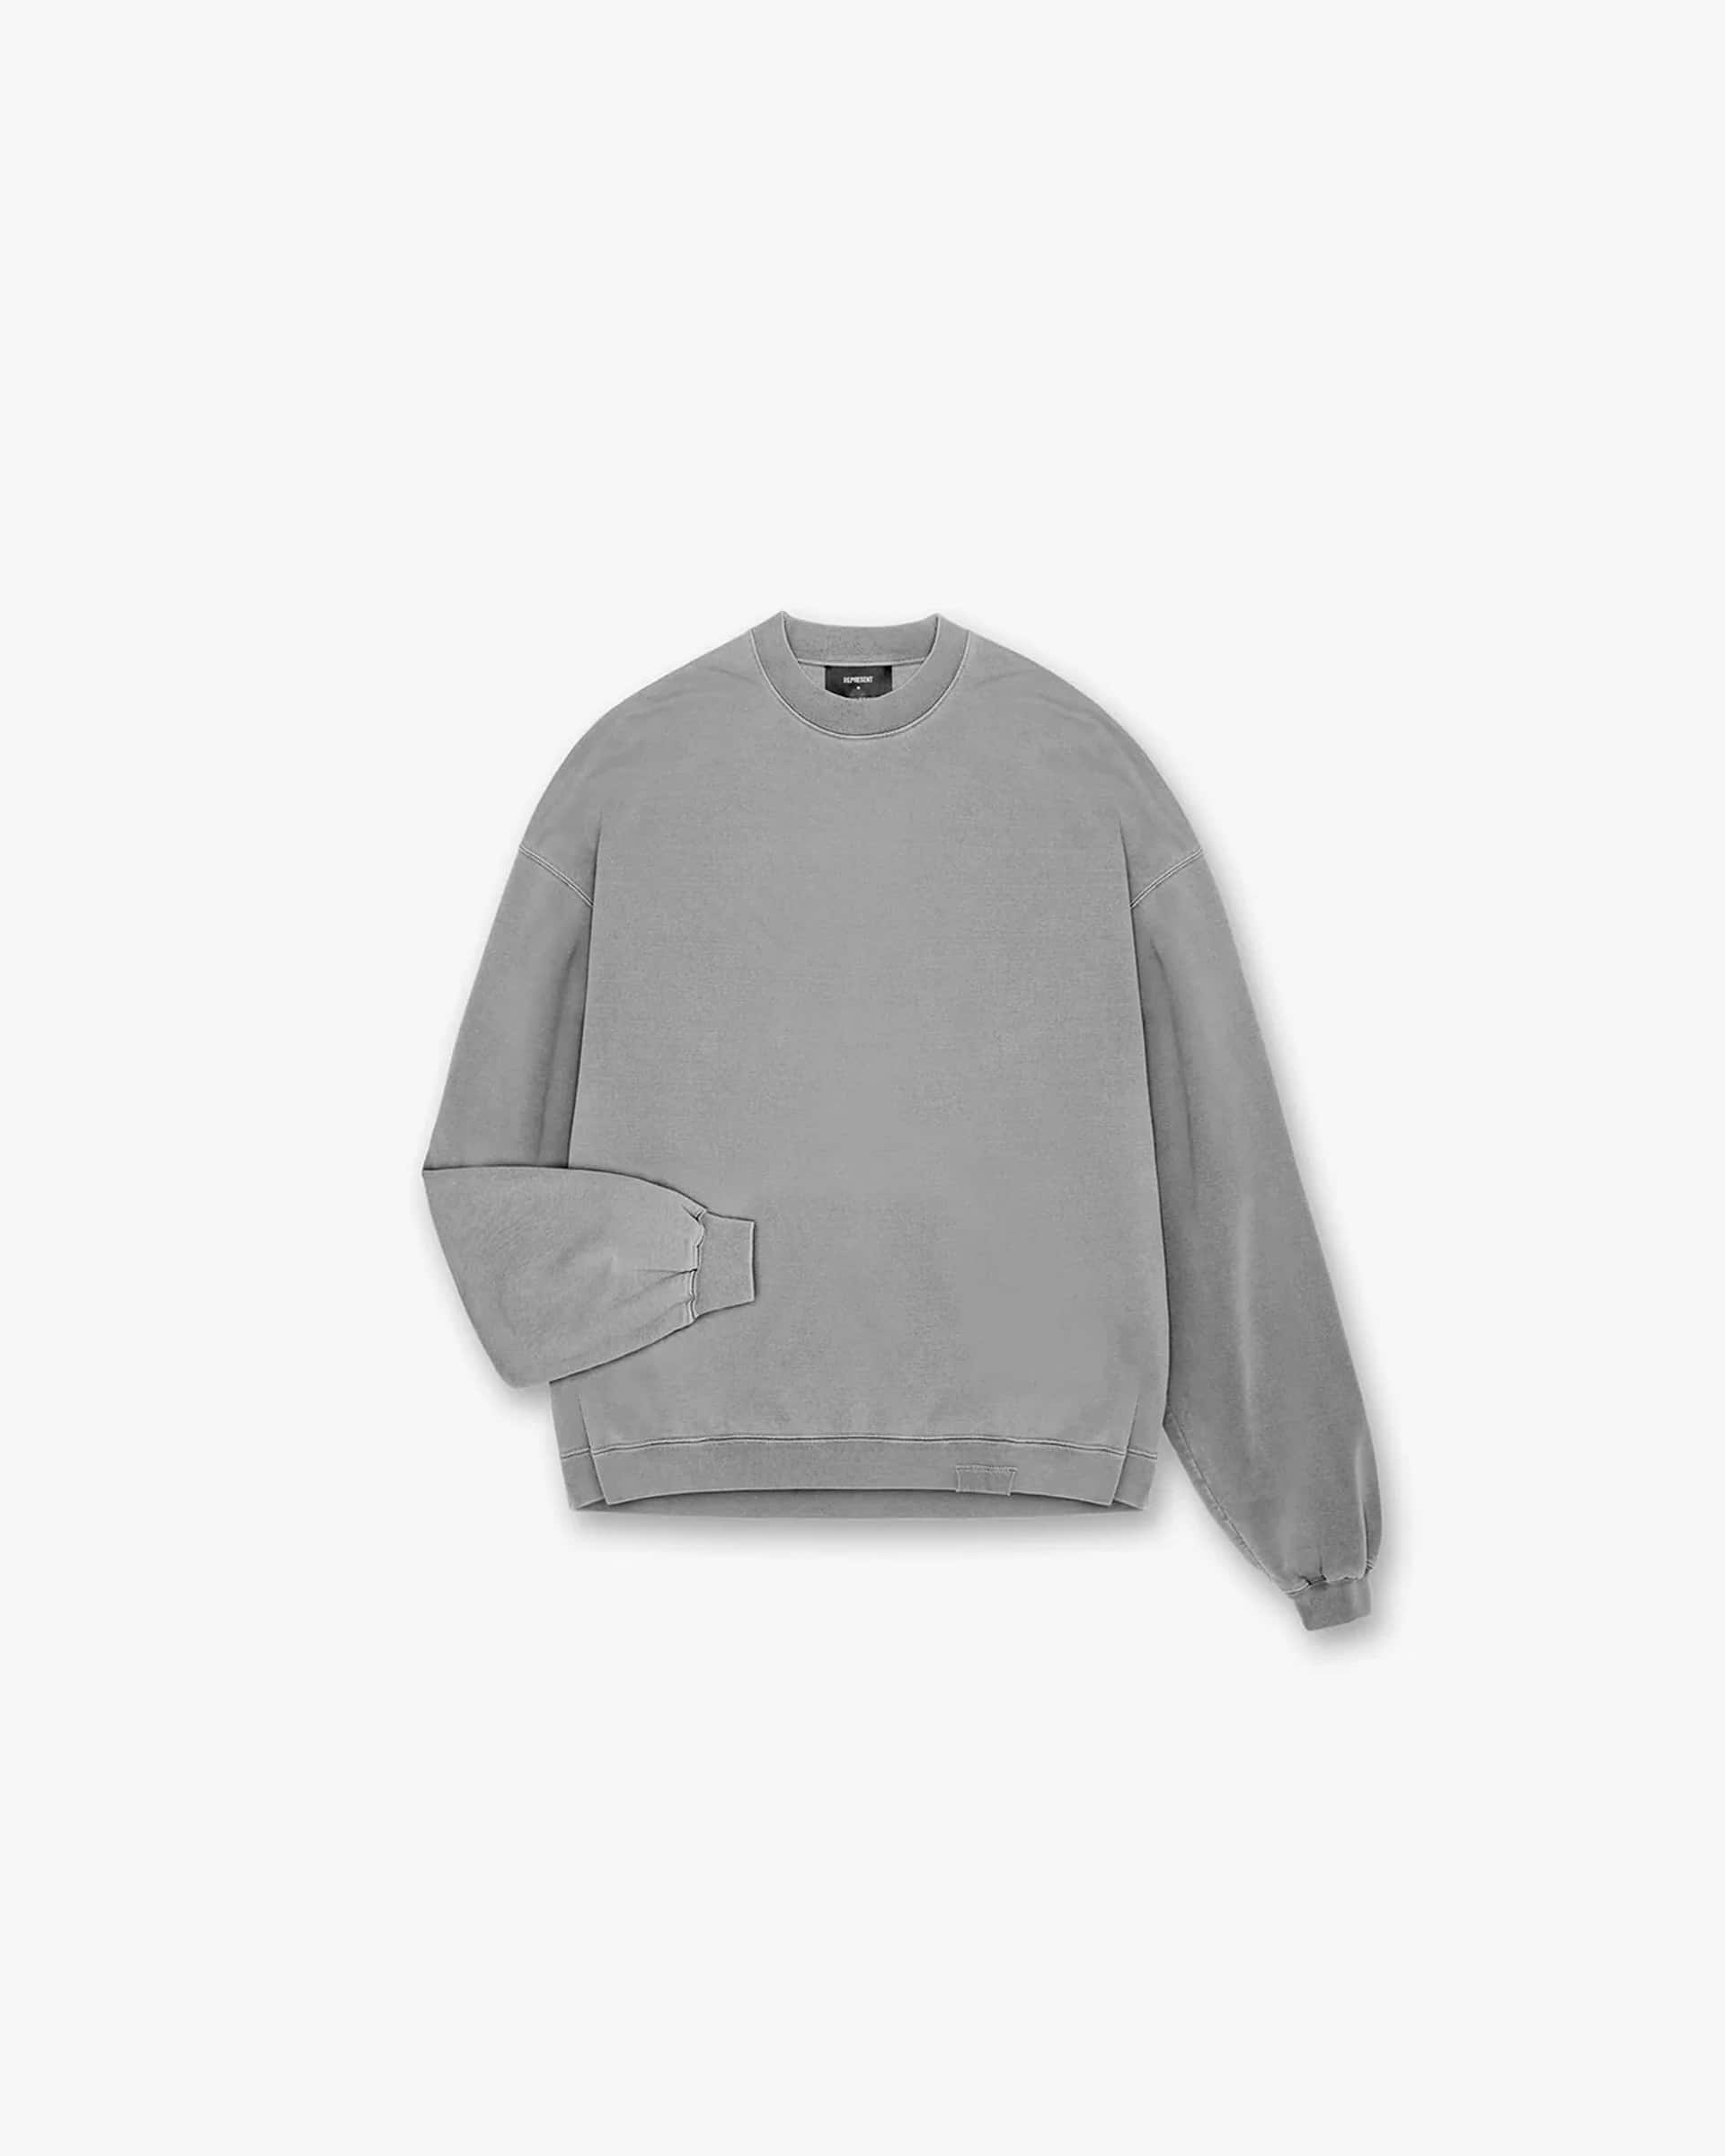 Initial Sweater | Ultimate Grey Sweaters Initial | Represent Clo